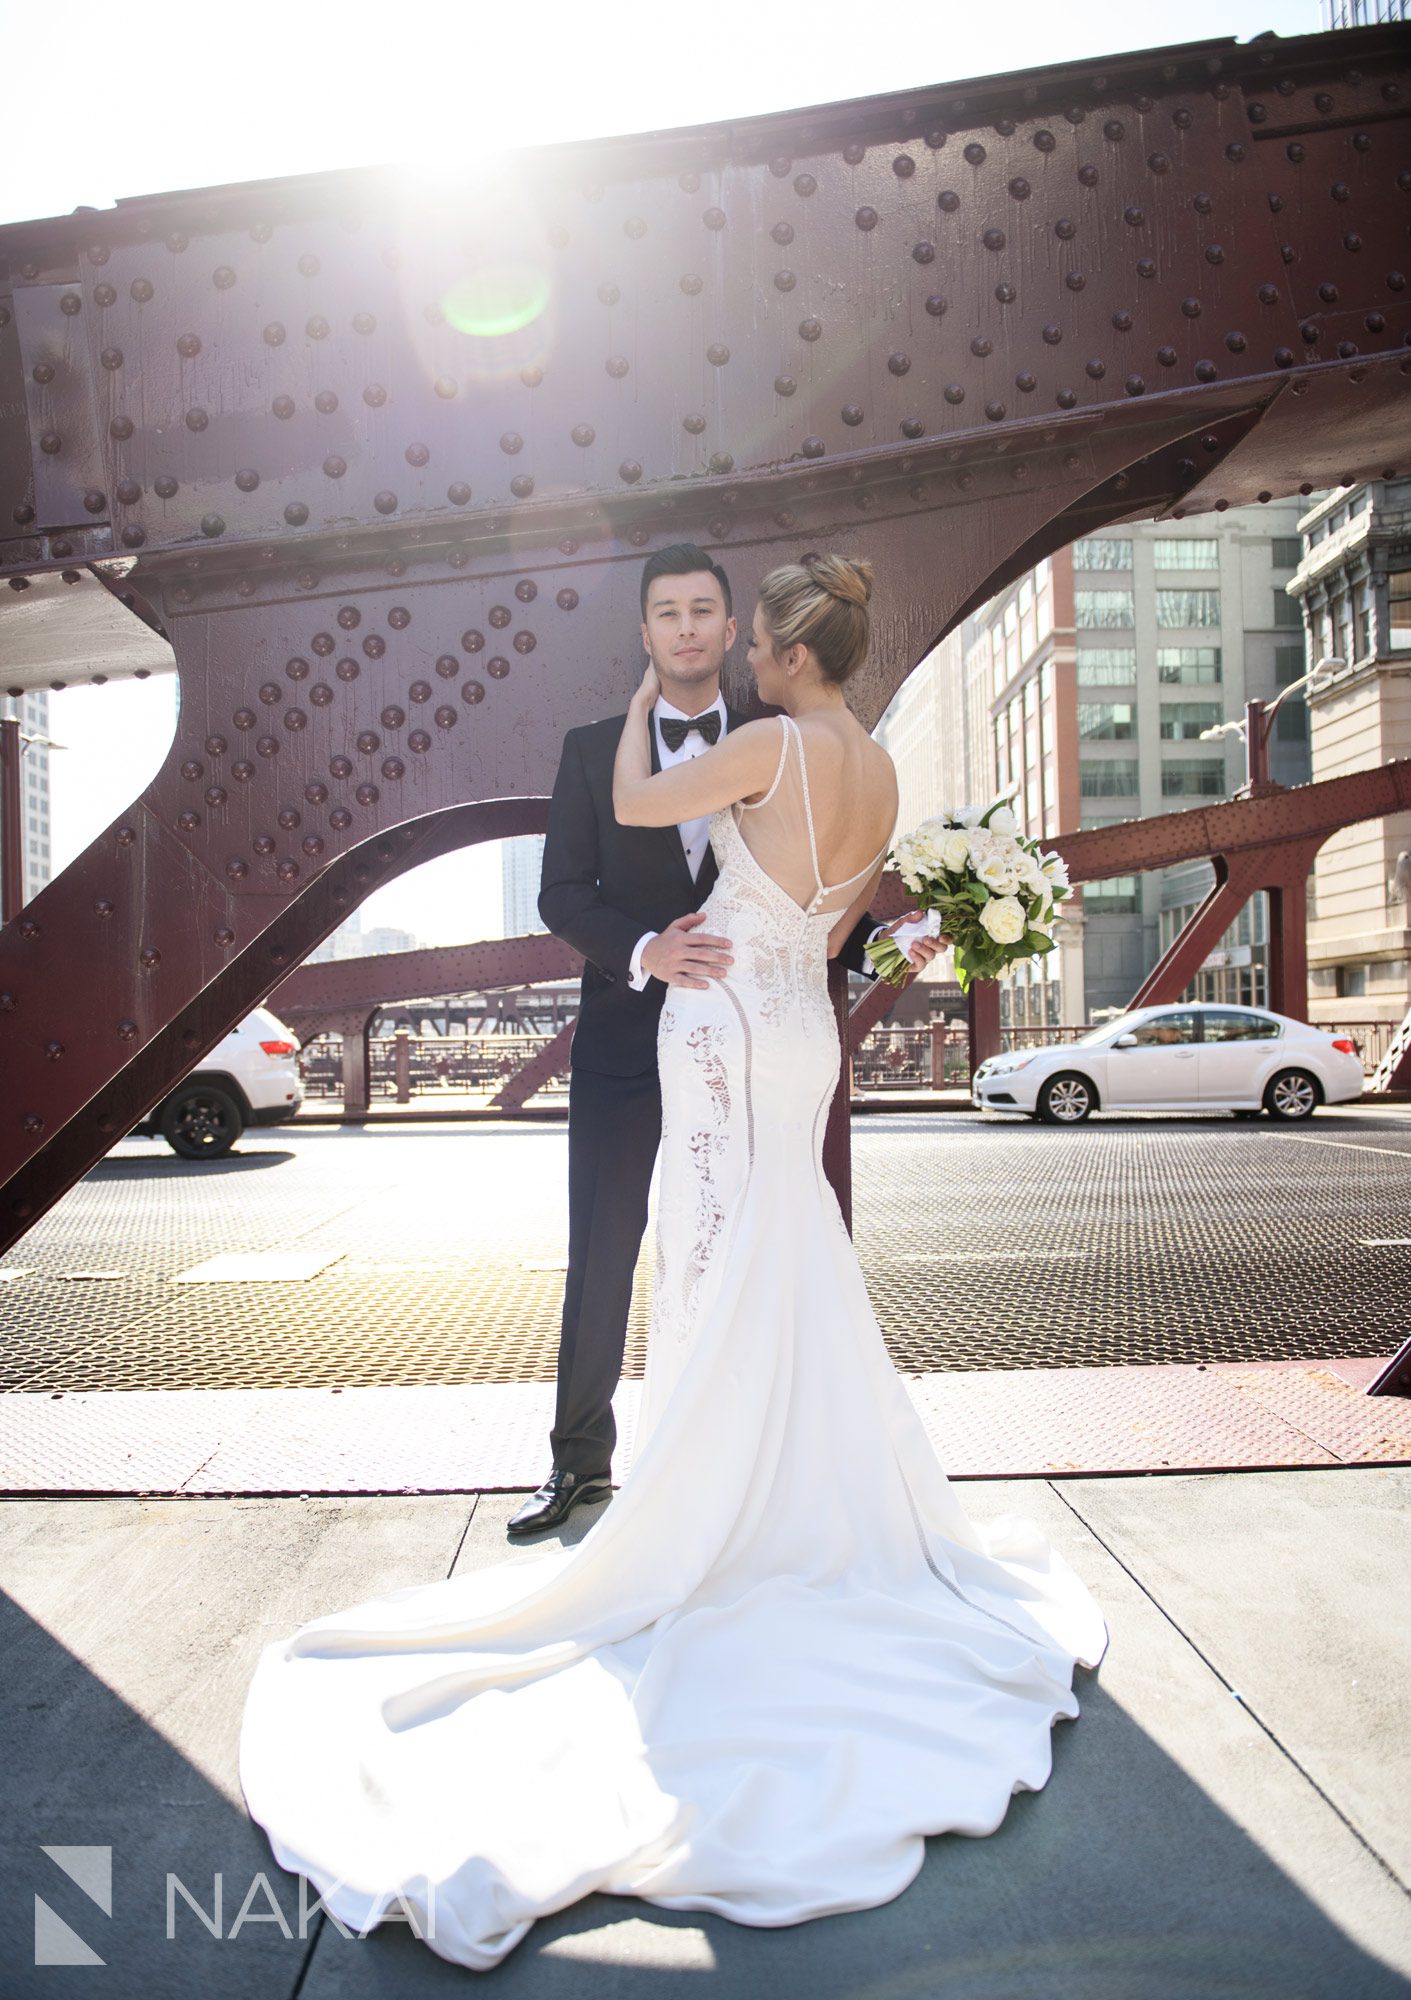 Lasalle st wedding photographer Chicago bridge bride groom